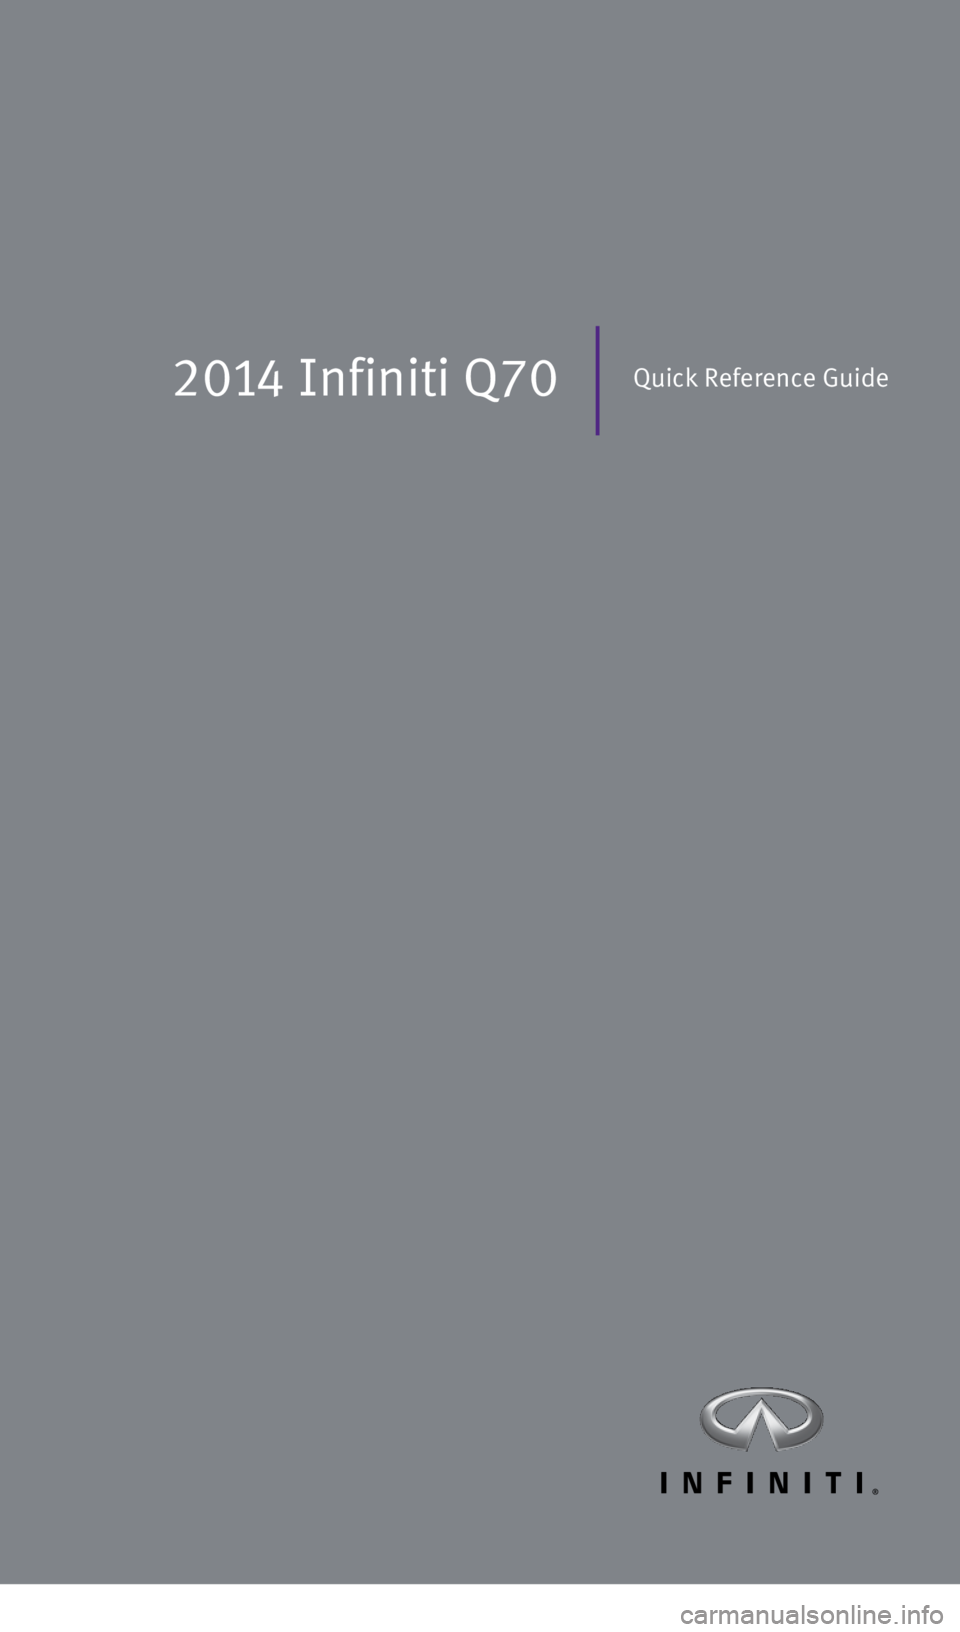 INFINITI Q70 2014  Quick Reference Guide 2014 Infiniti Q70Quick Reference Guide
1276460_14a_Infiniti_Q70_QRG_102813.indd   310/28/13   2:30 PM 